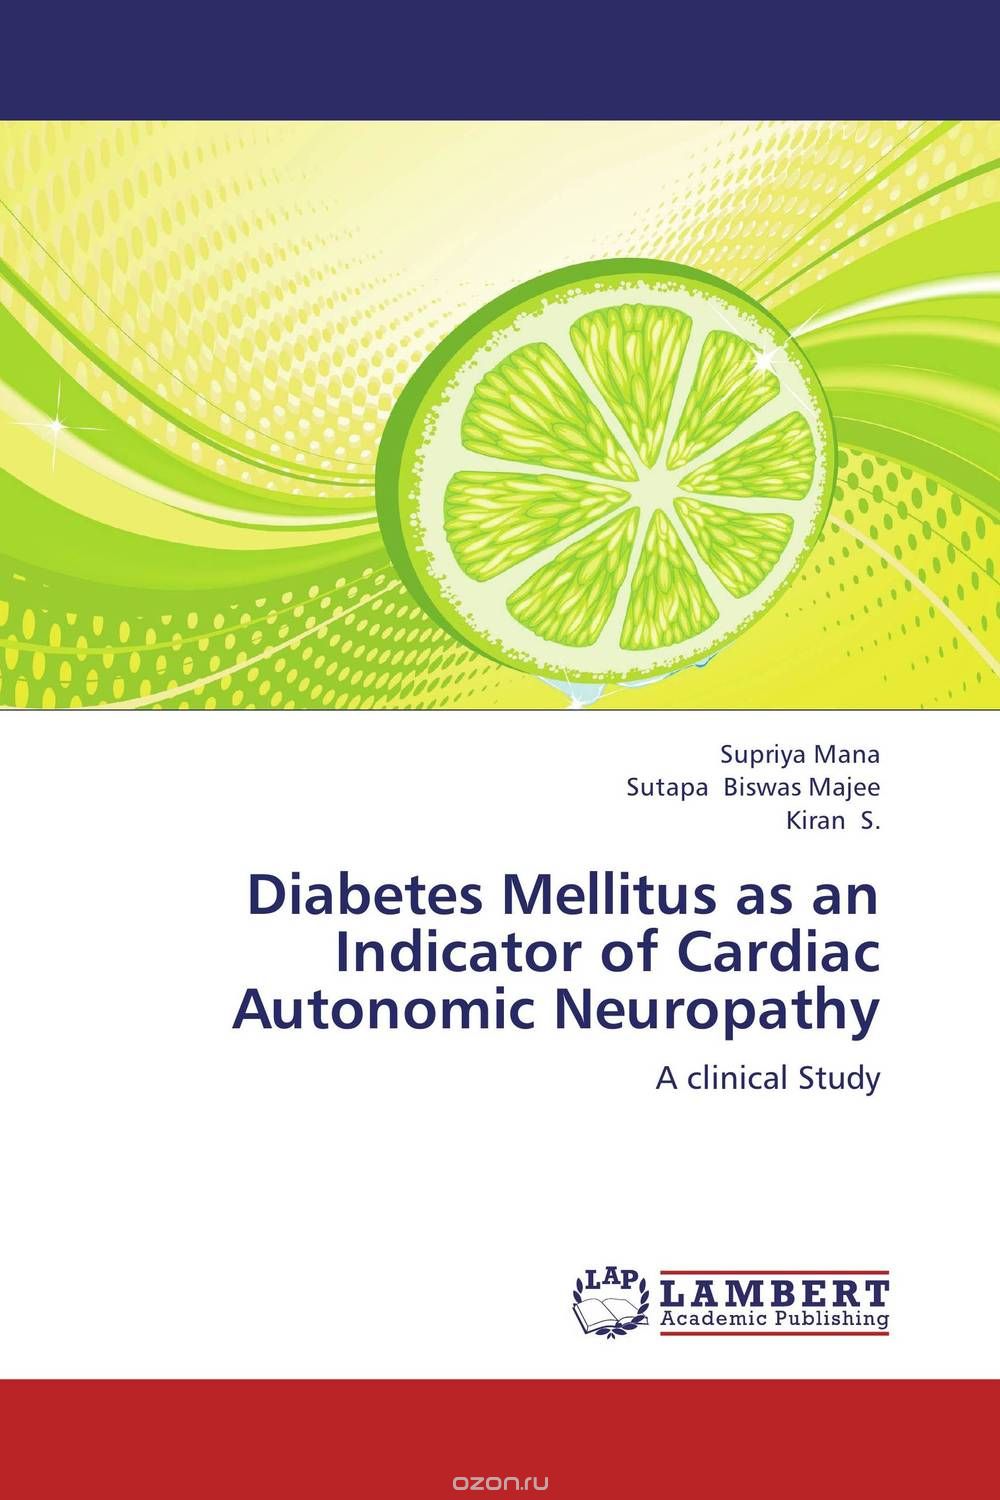 Скачать книгу "Diabetes Mellitus as an Indicator of Cardiac Autonomic Neuropathy"